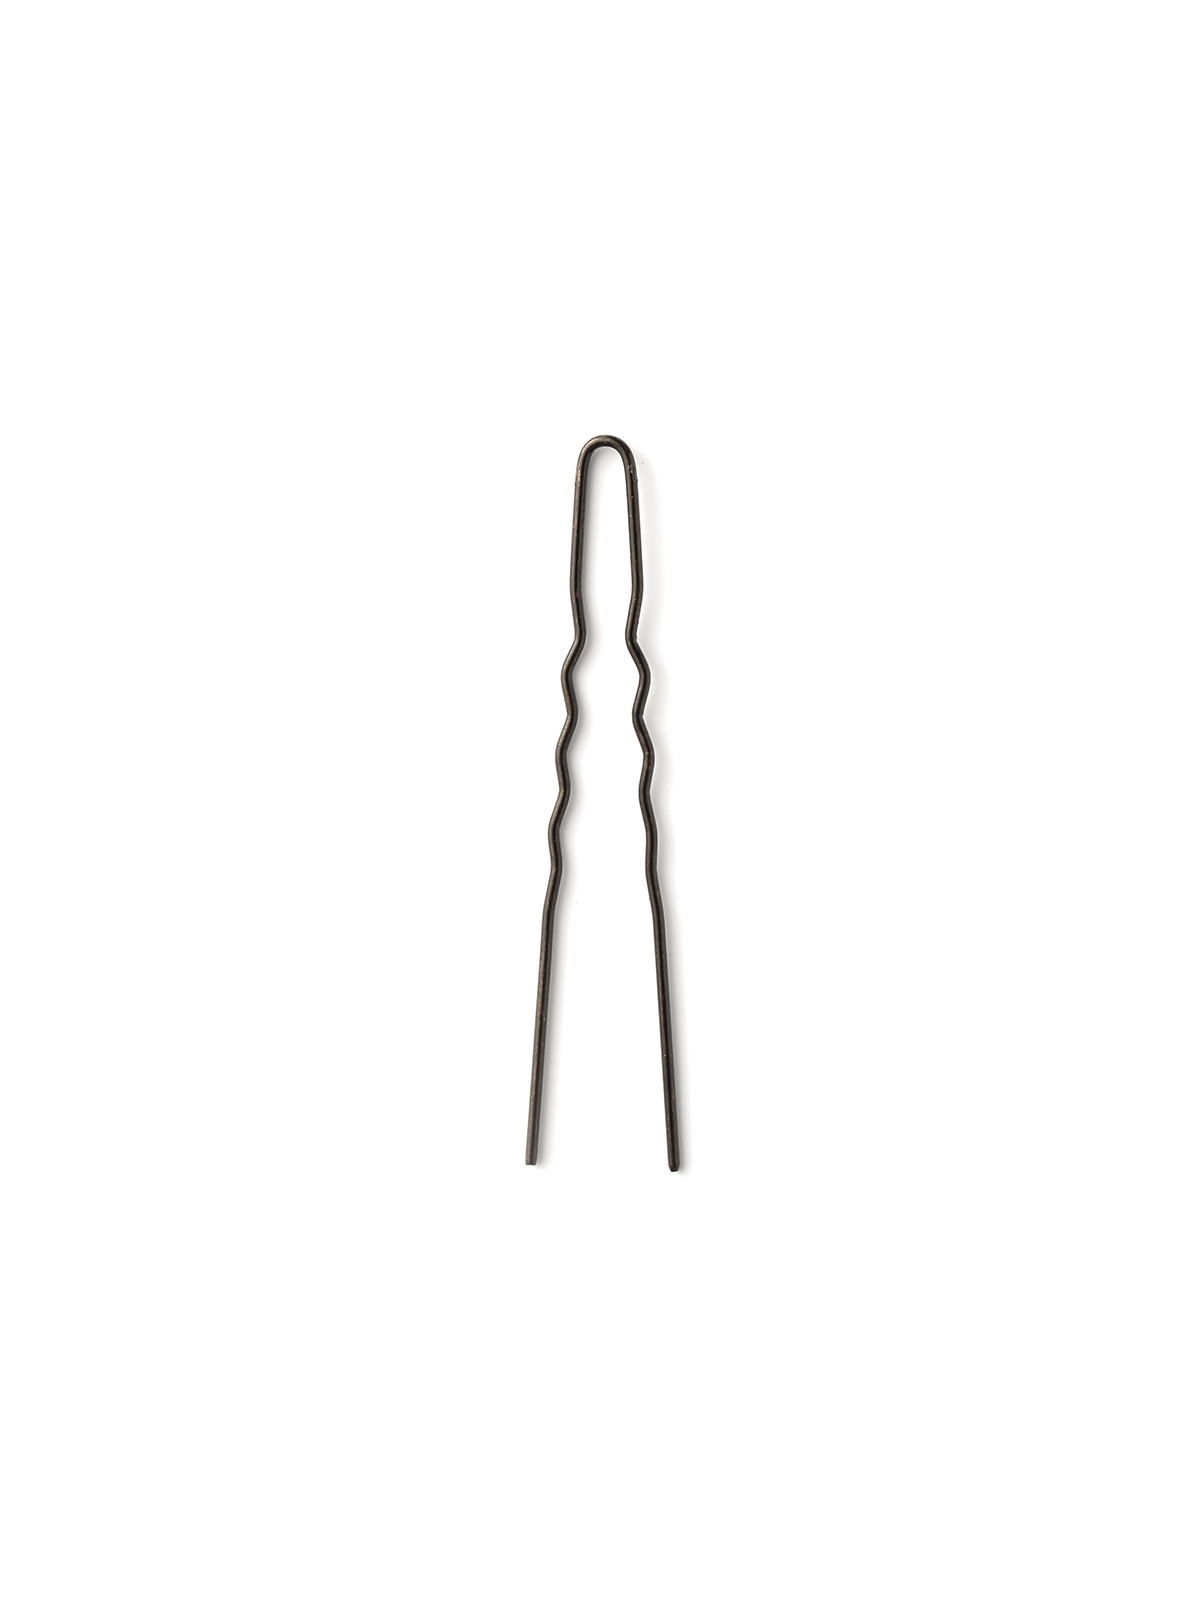 Bravehead Waved Hair Pins 67mm